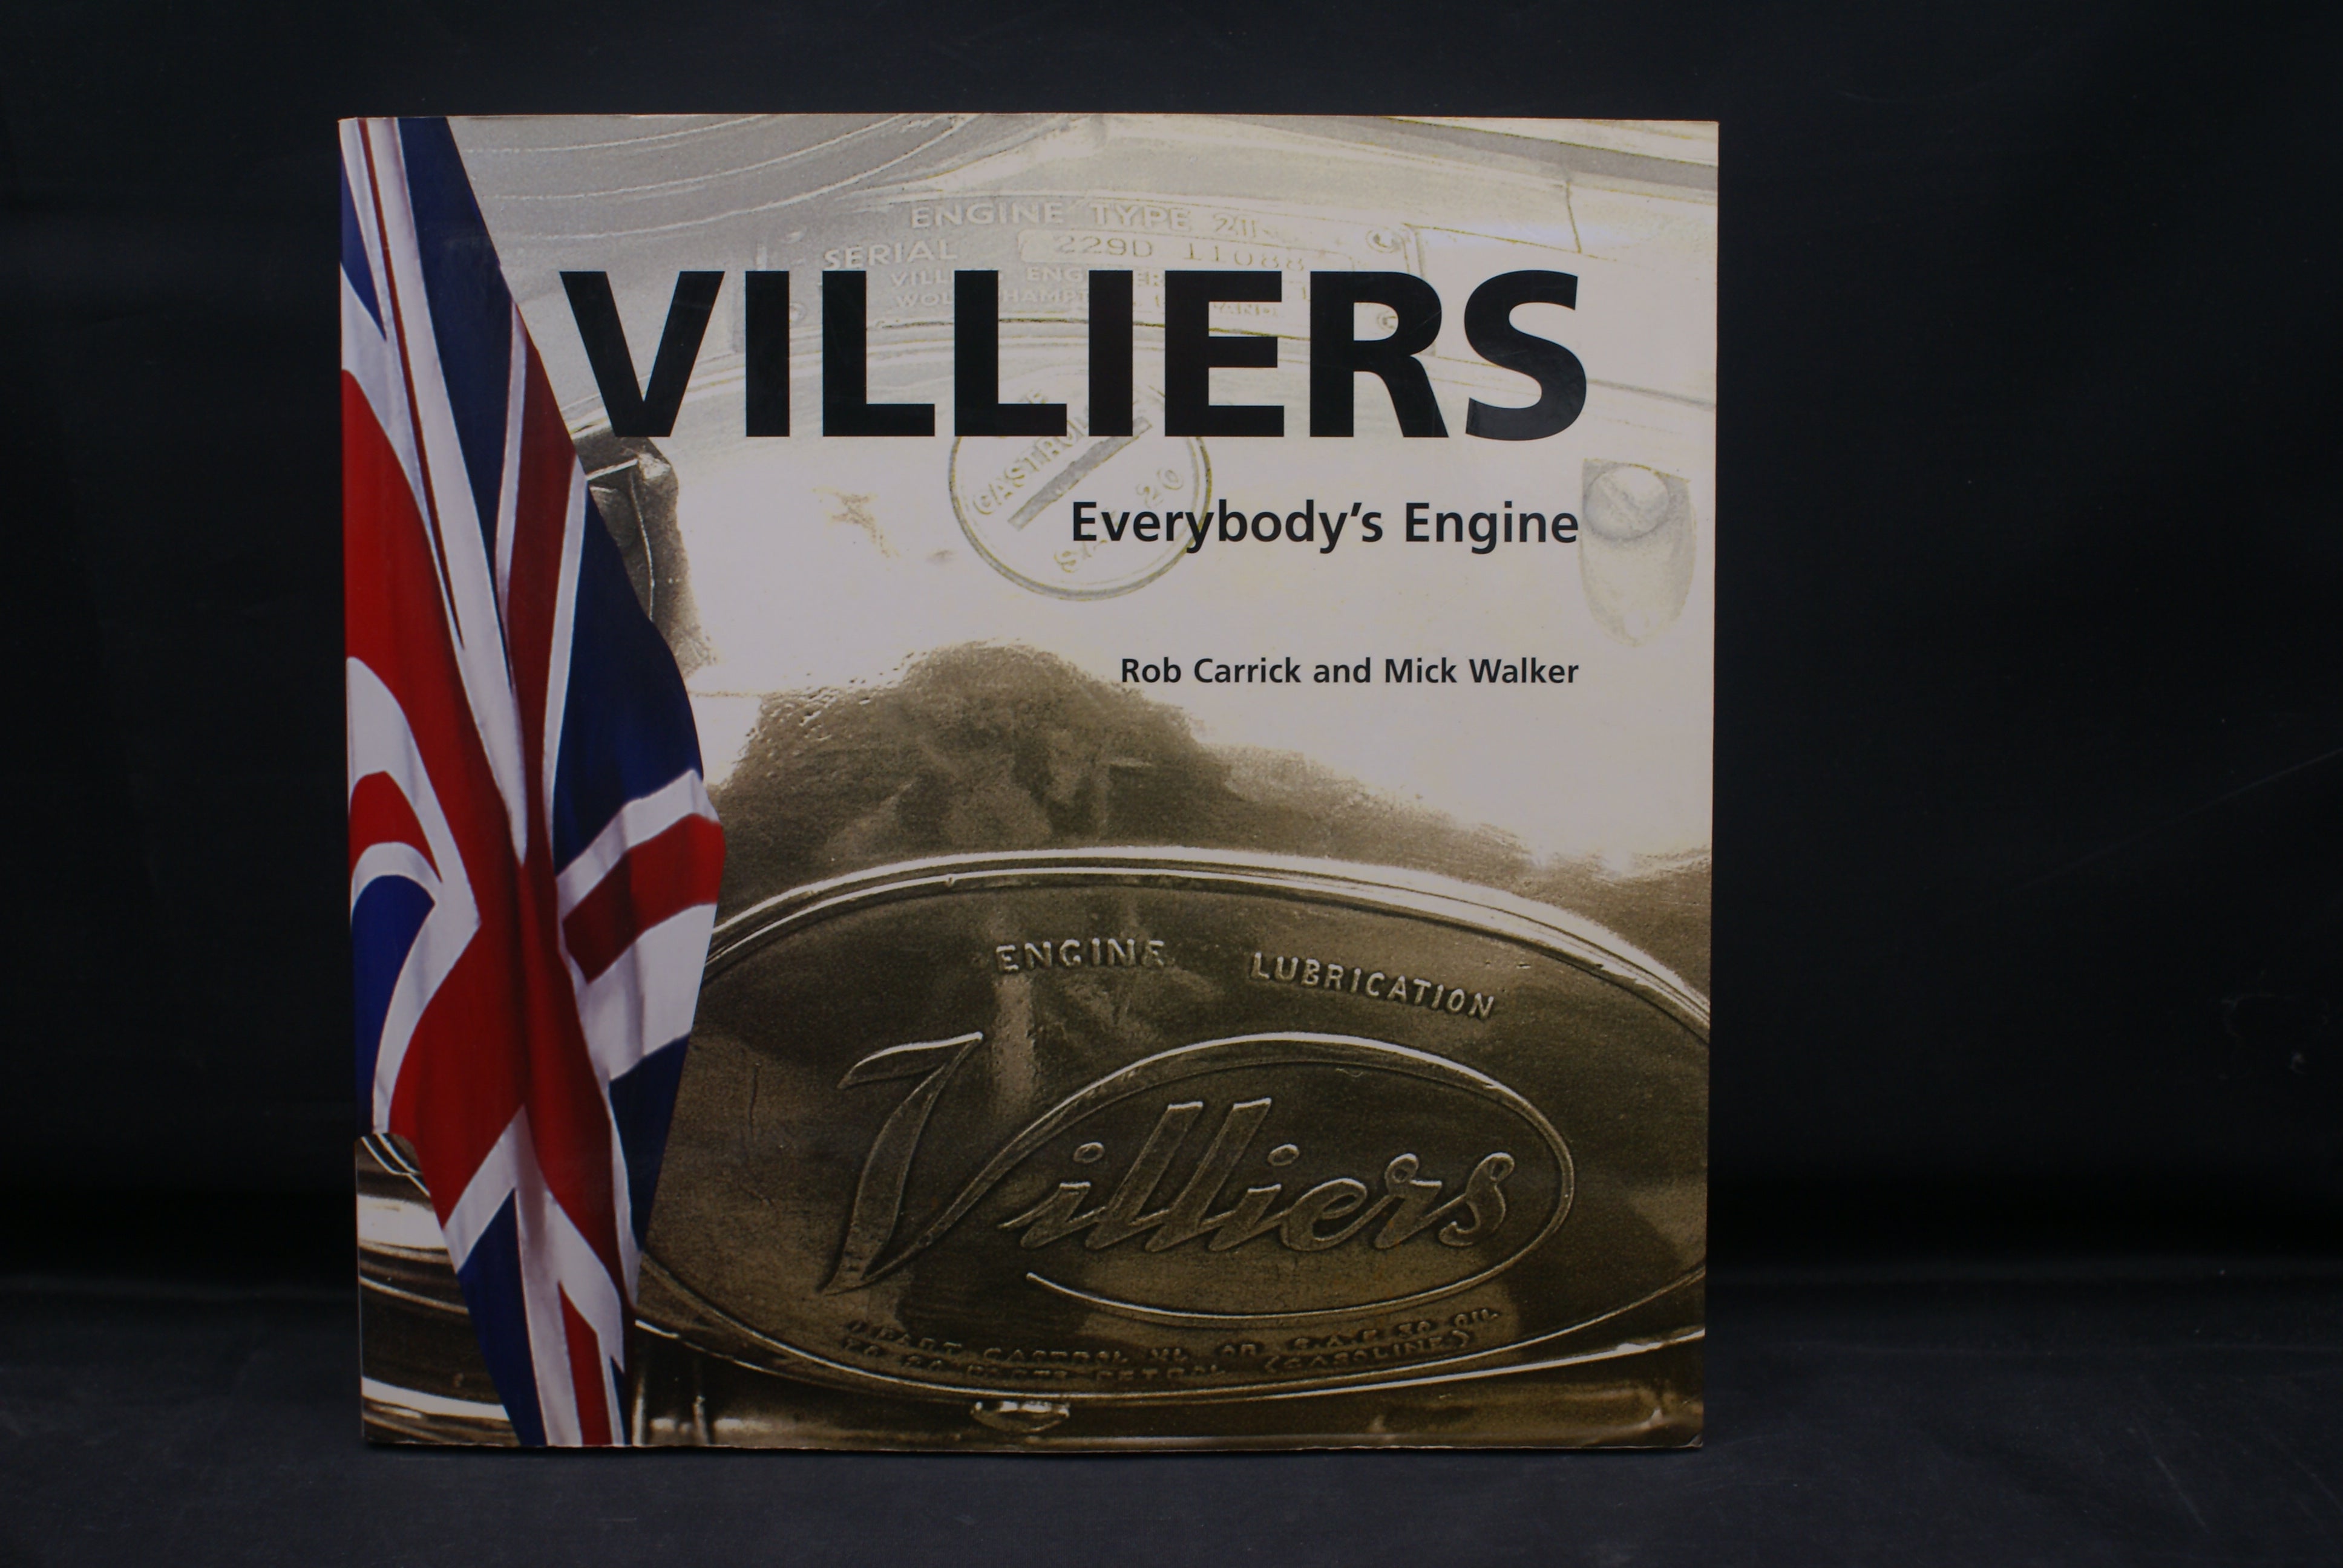 Villiers, Everybody's Engine